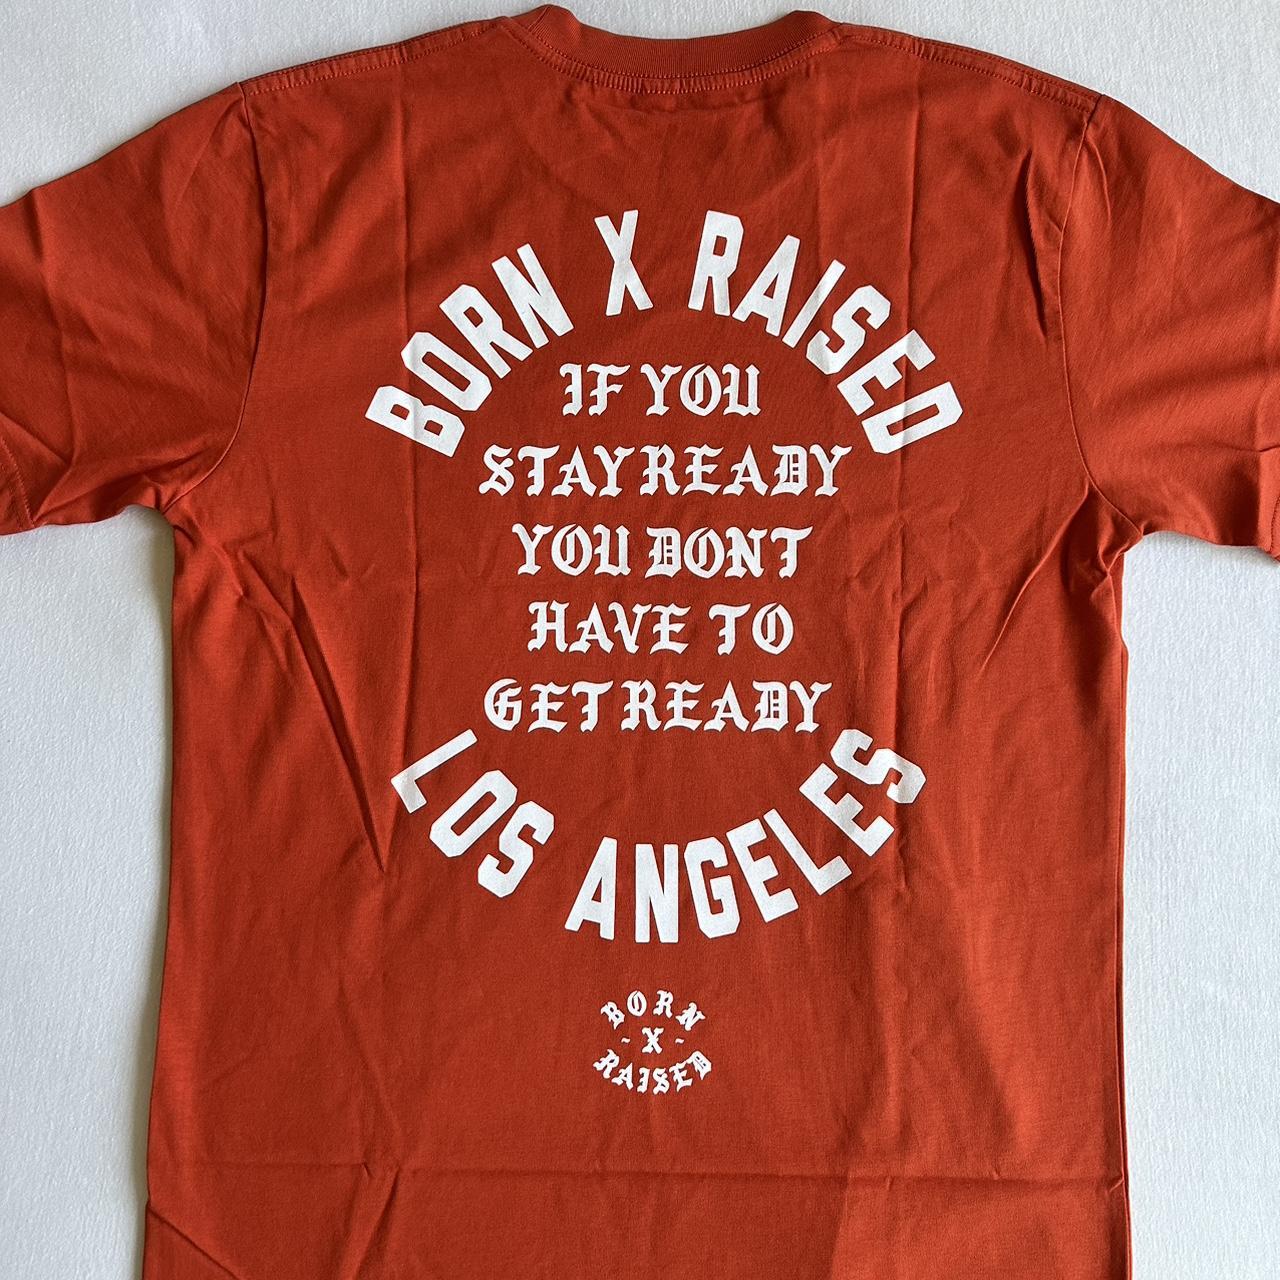 Born X Raised/LA Kings Medium shirt. Never - Depop